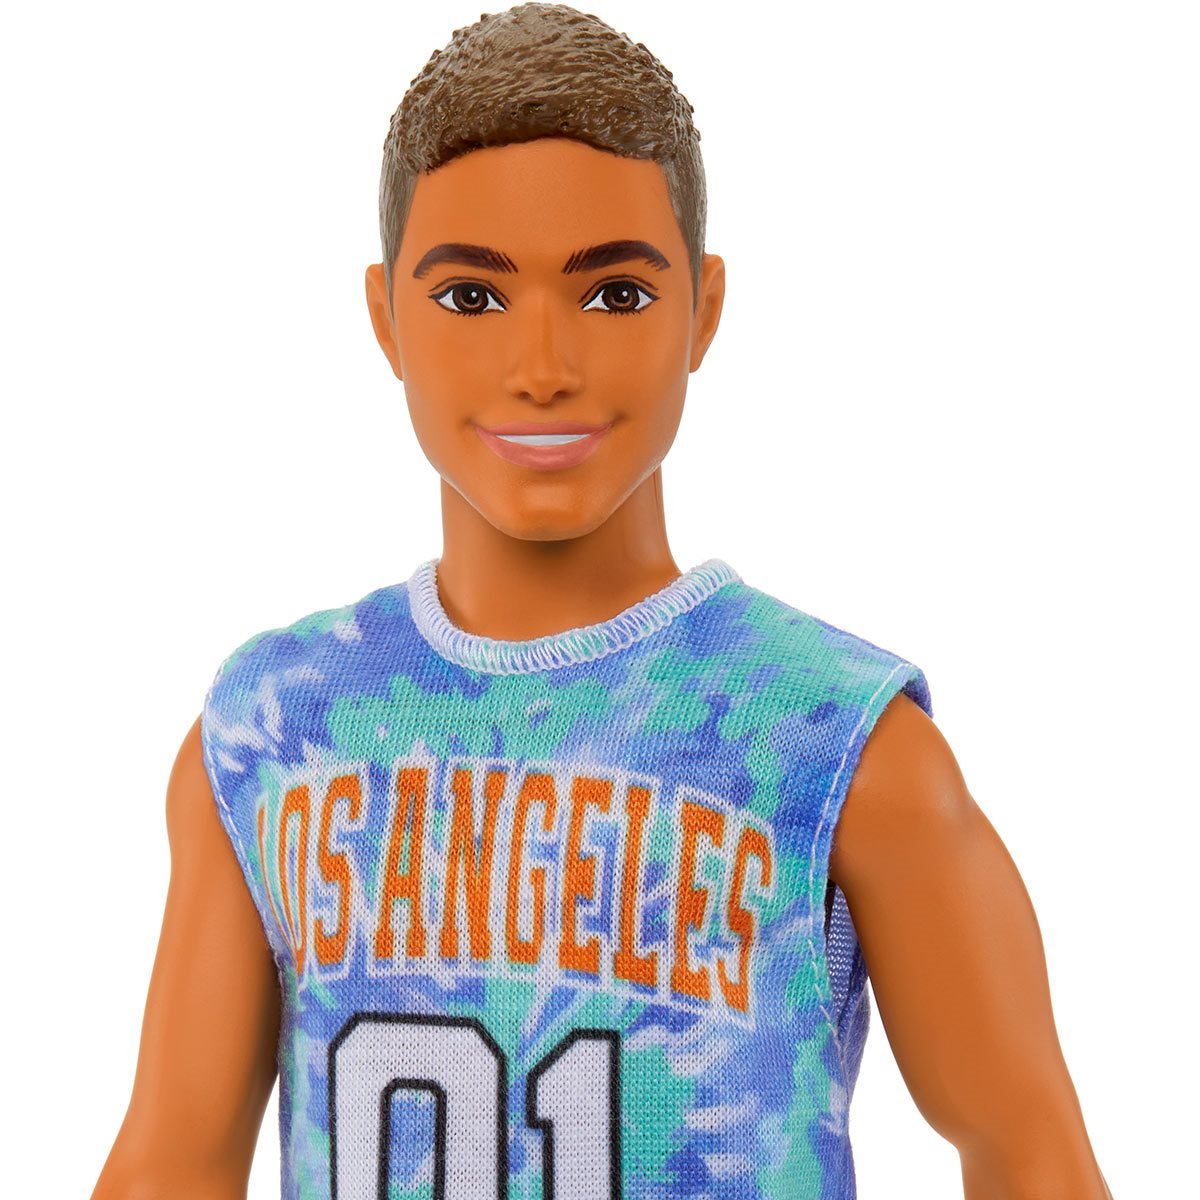 HPF79 - Barbie Fashionistas Ken Doll Sporty Jersey